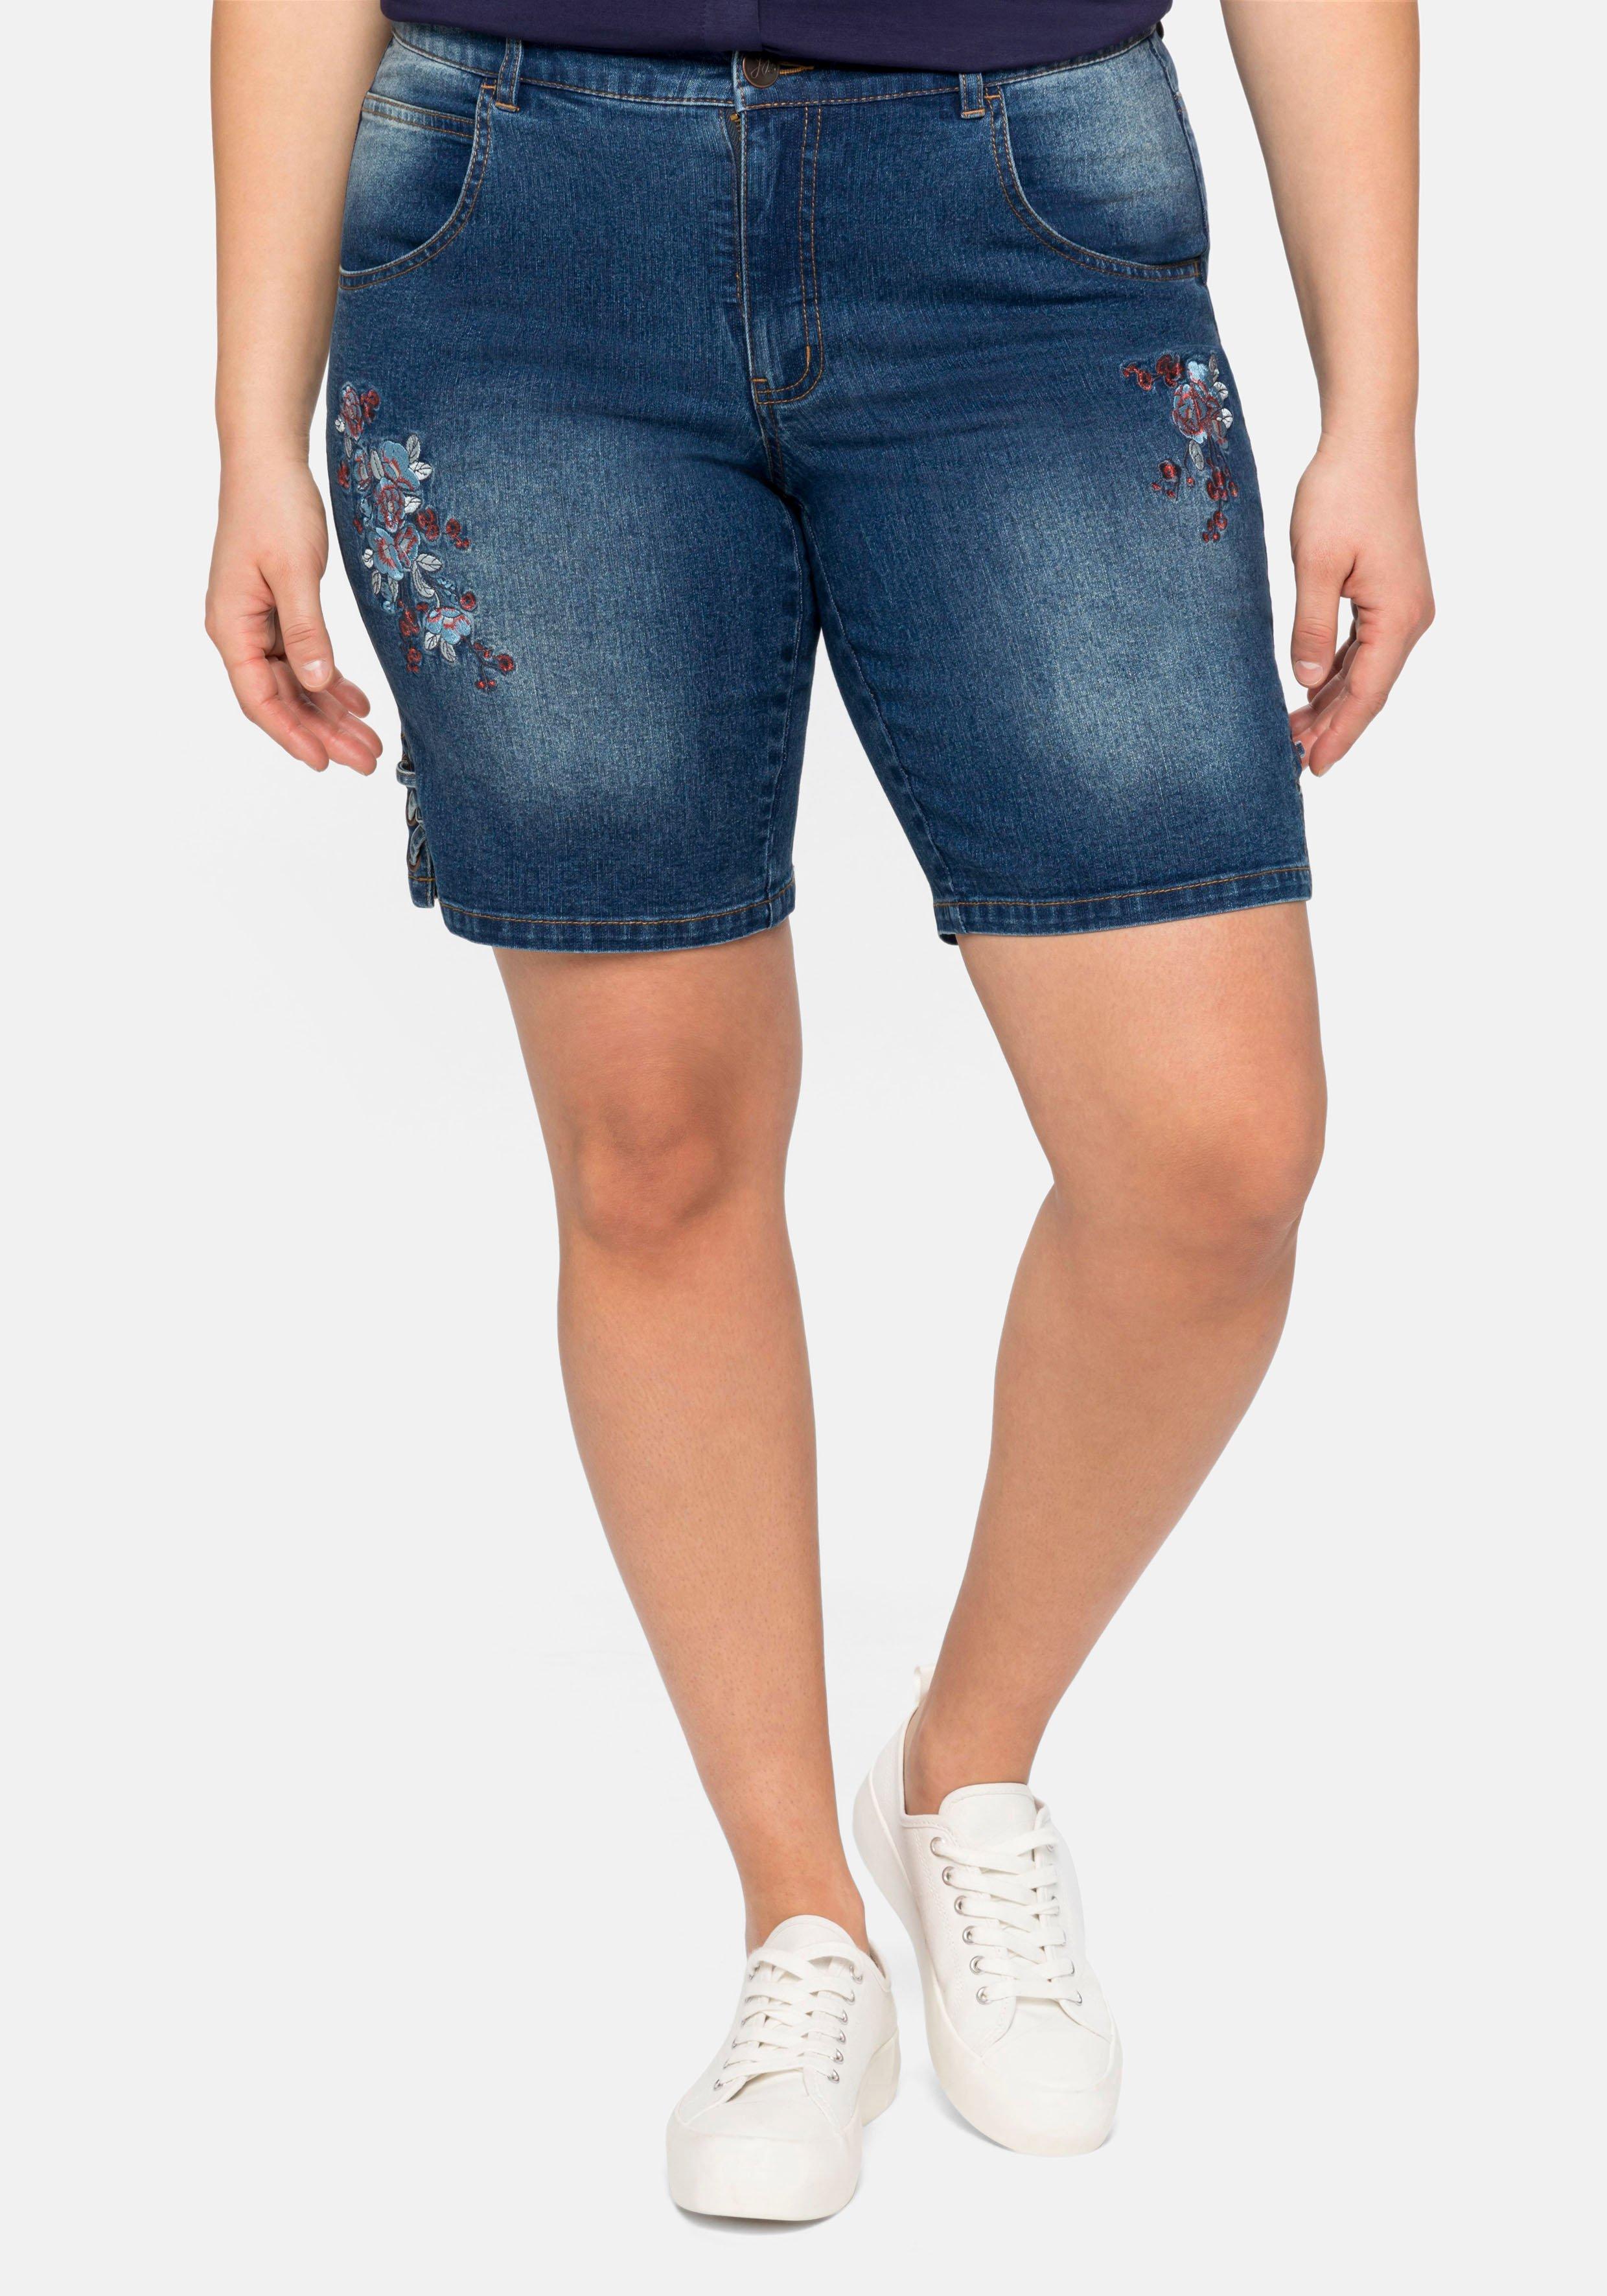 Günstige Jeans & Hosen in großen Größen | sheego ♥ Plus Size Mode